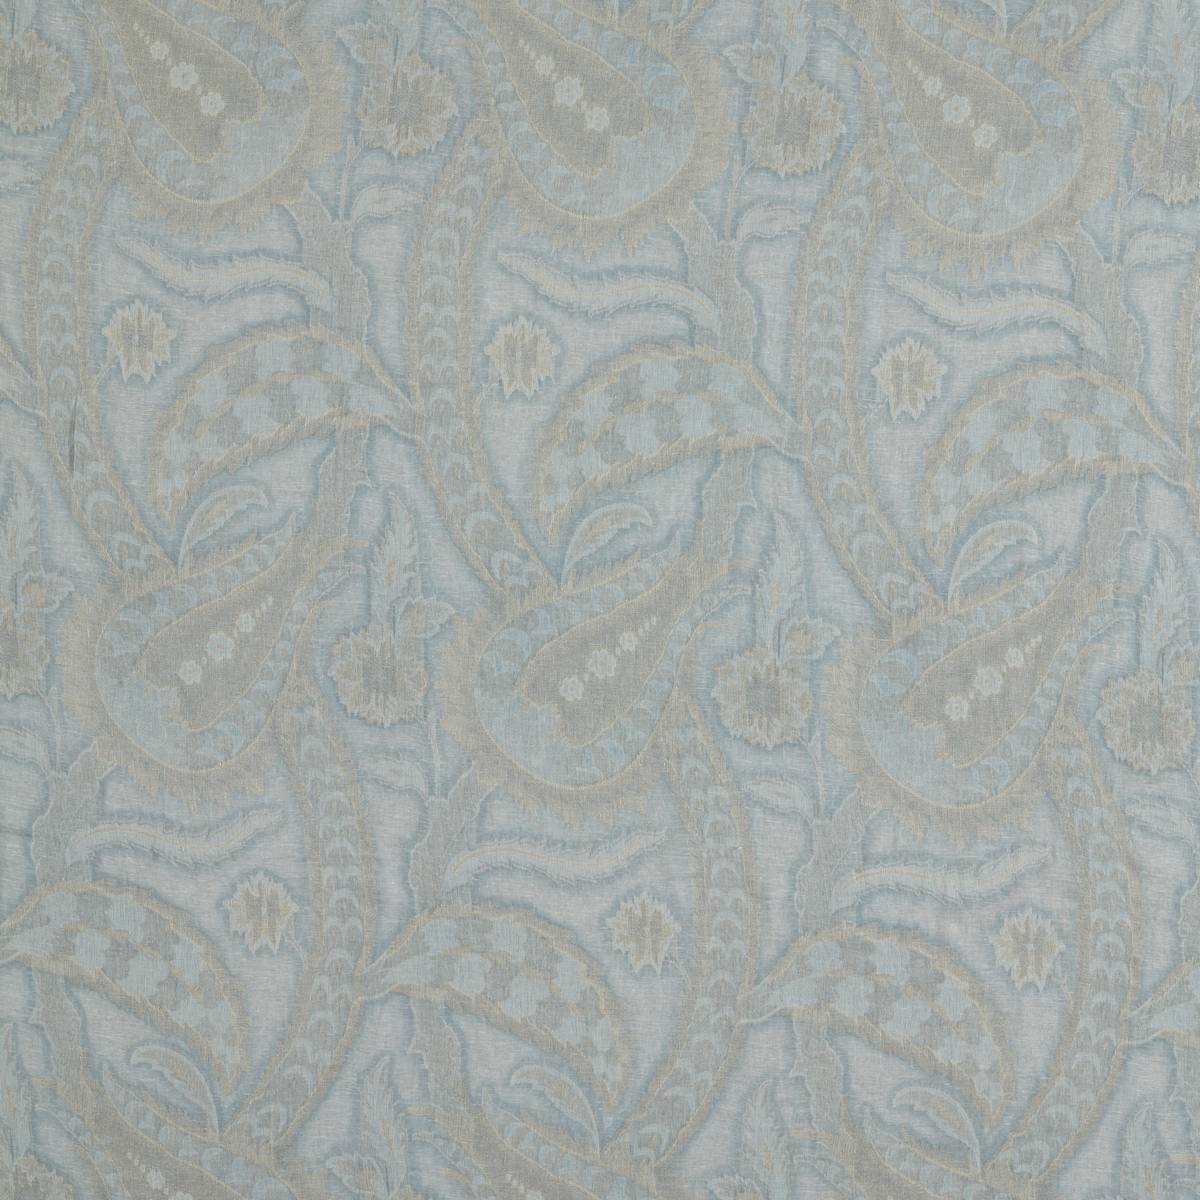 Oberon La Seine Fabric by Zoffany